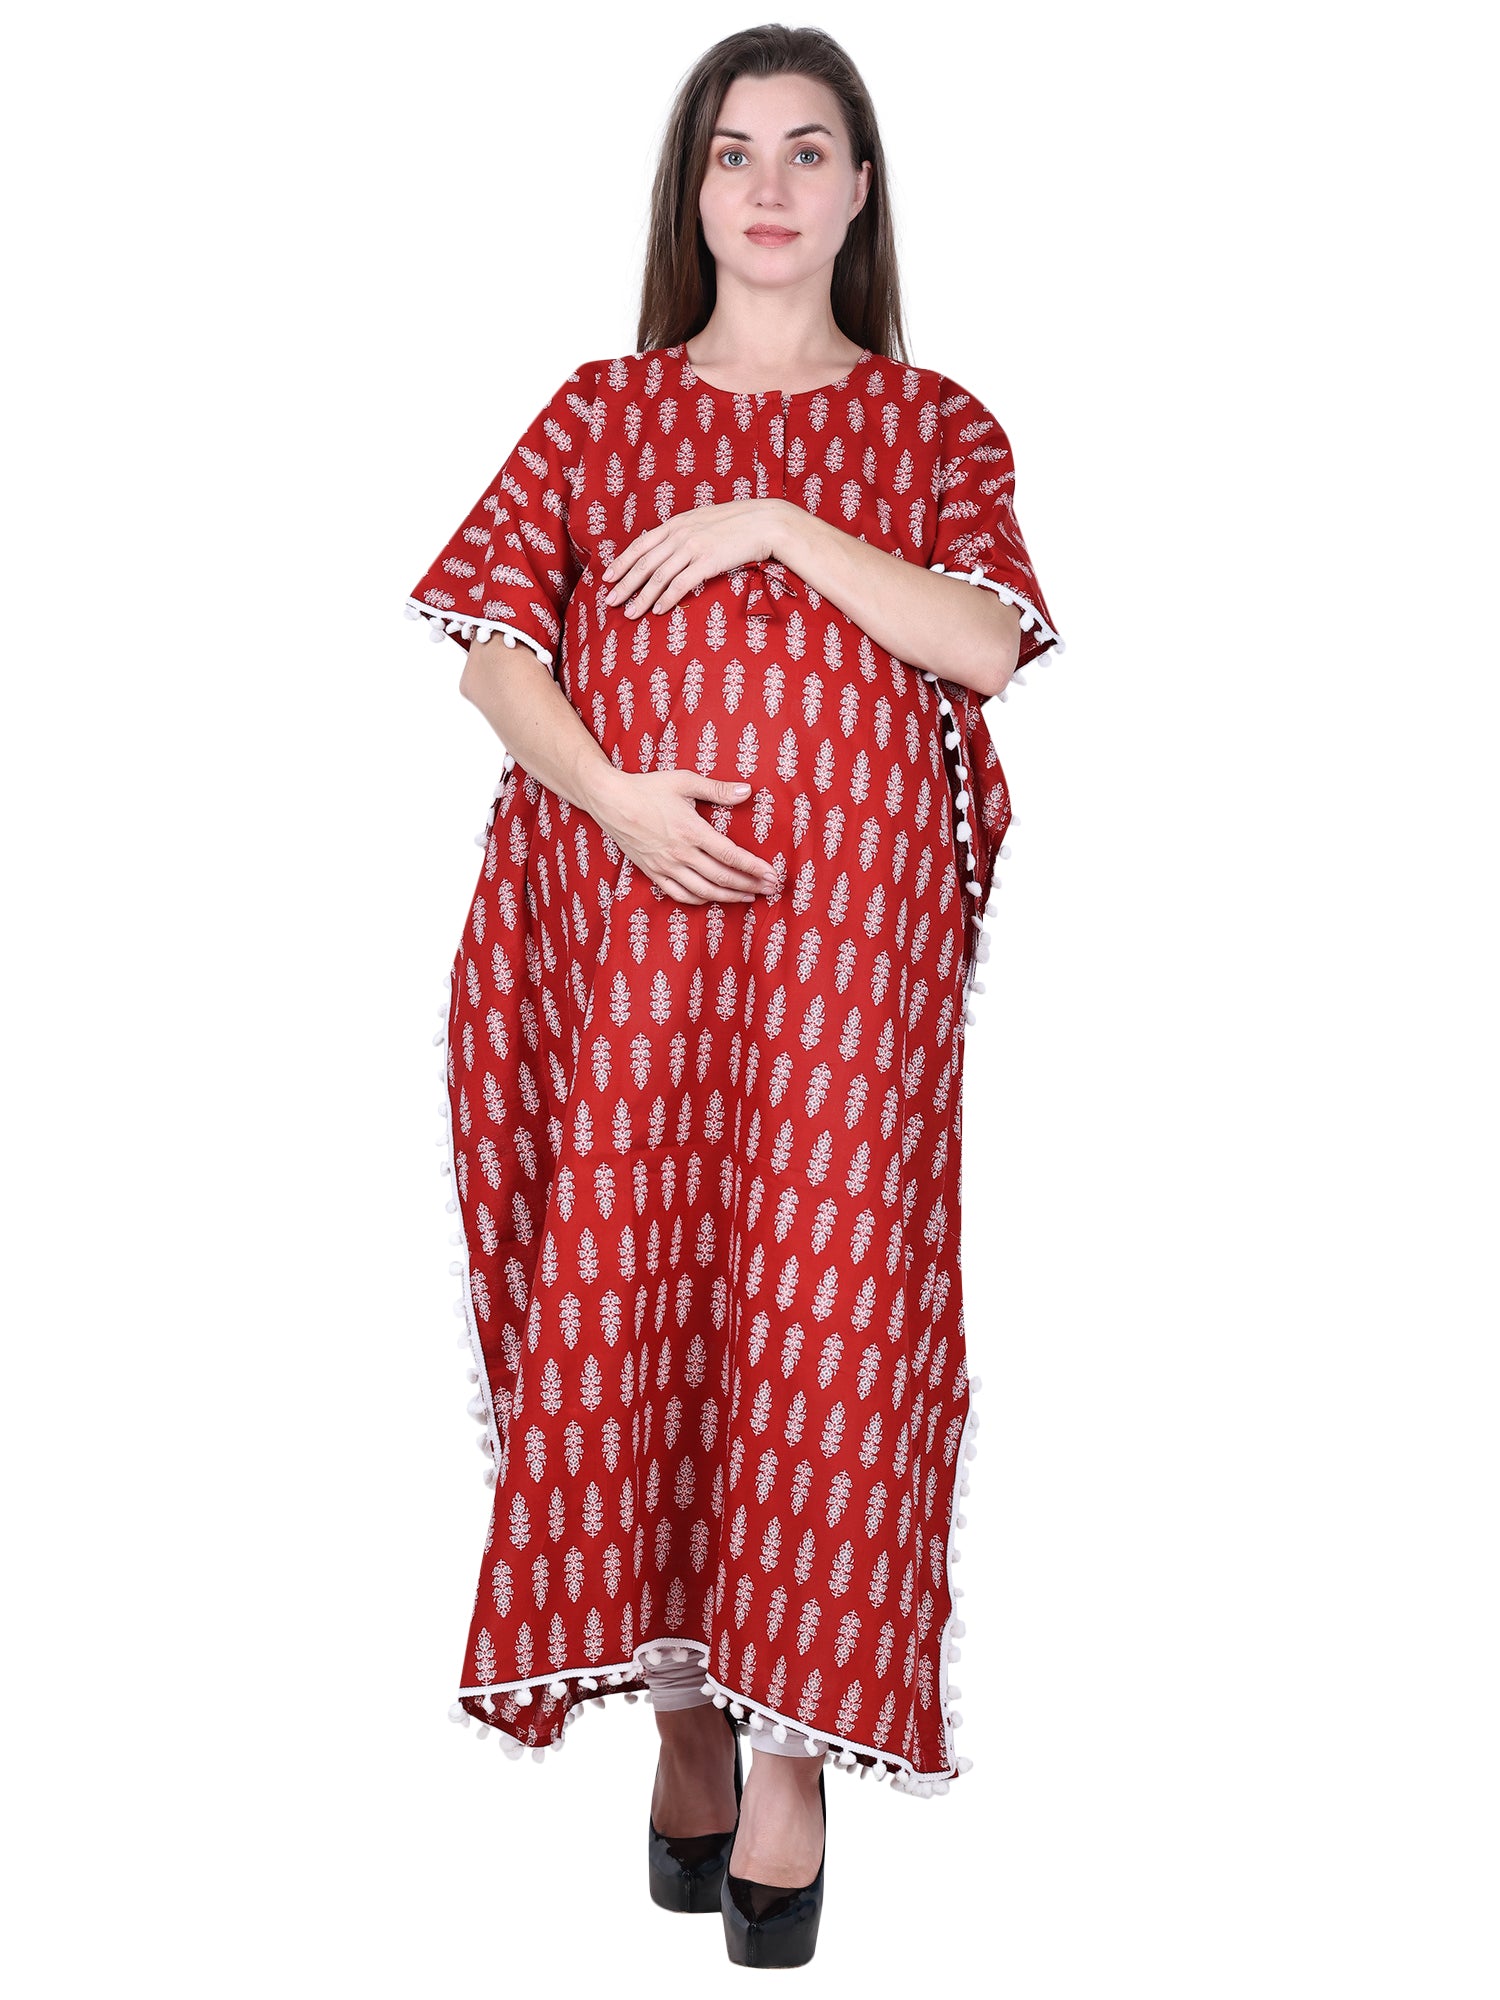 Nursing Gowns - Buy Nursing Gowns Online at Best Prices In India | Flipkart .com